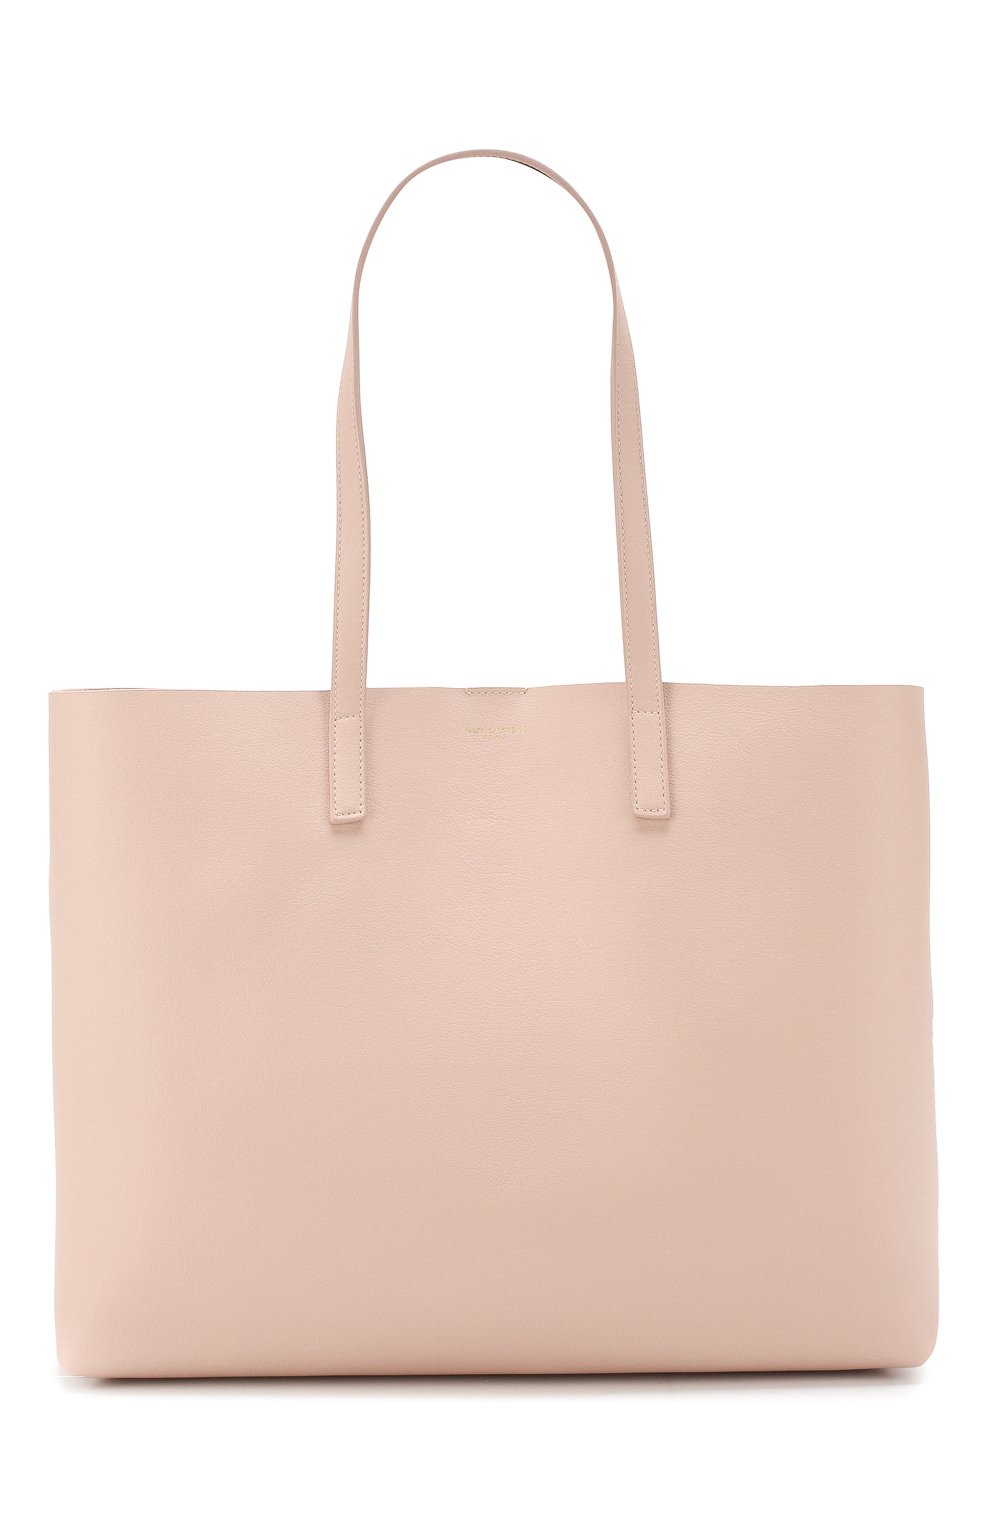 Женский сумка-тоут shopping large SAINT LAURENT светло-розового цвета, арт. 600281/CSV0J | Фото 1 (Сумки-технические: Сумки-шопперы; Материал: Натуральная кожа; Размер: large)